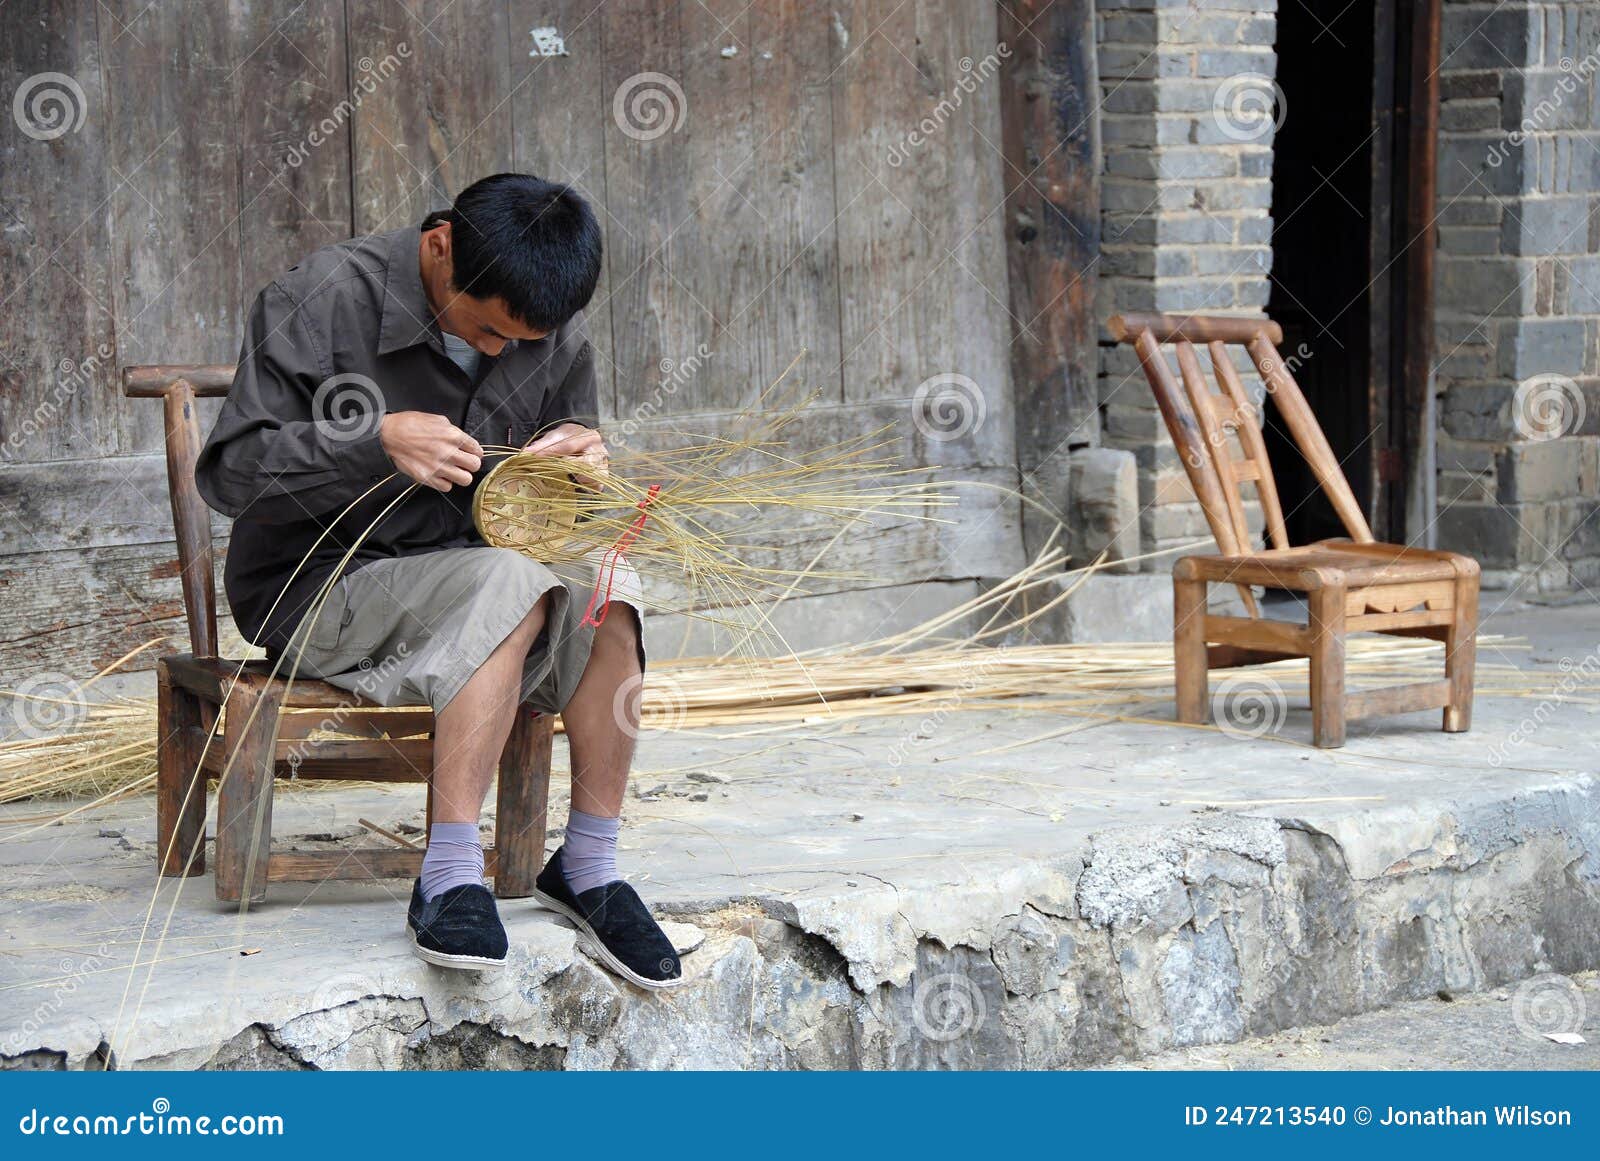 Fenghuang, Hunan Province, China: a Man Making a Basket Editorial Image ...